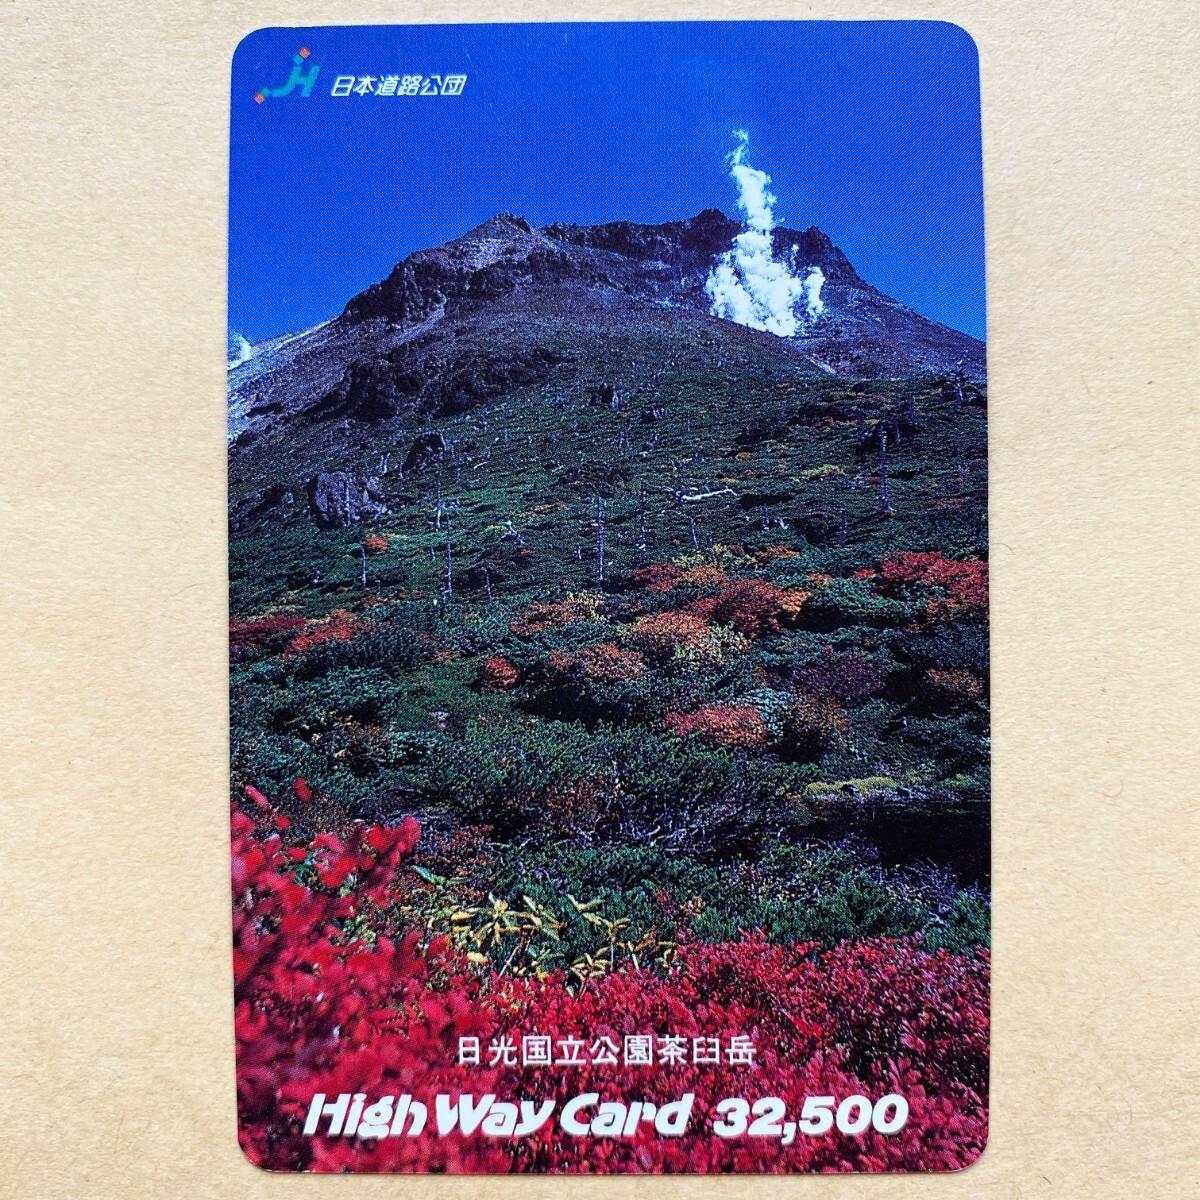 [ used ] flower highway card Japan road .. sunlight national park tea . peak 